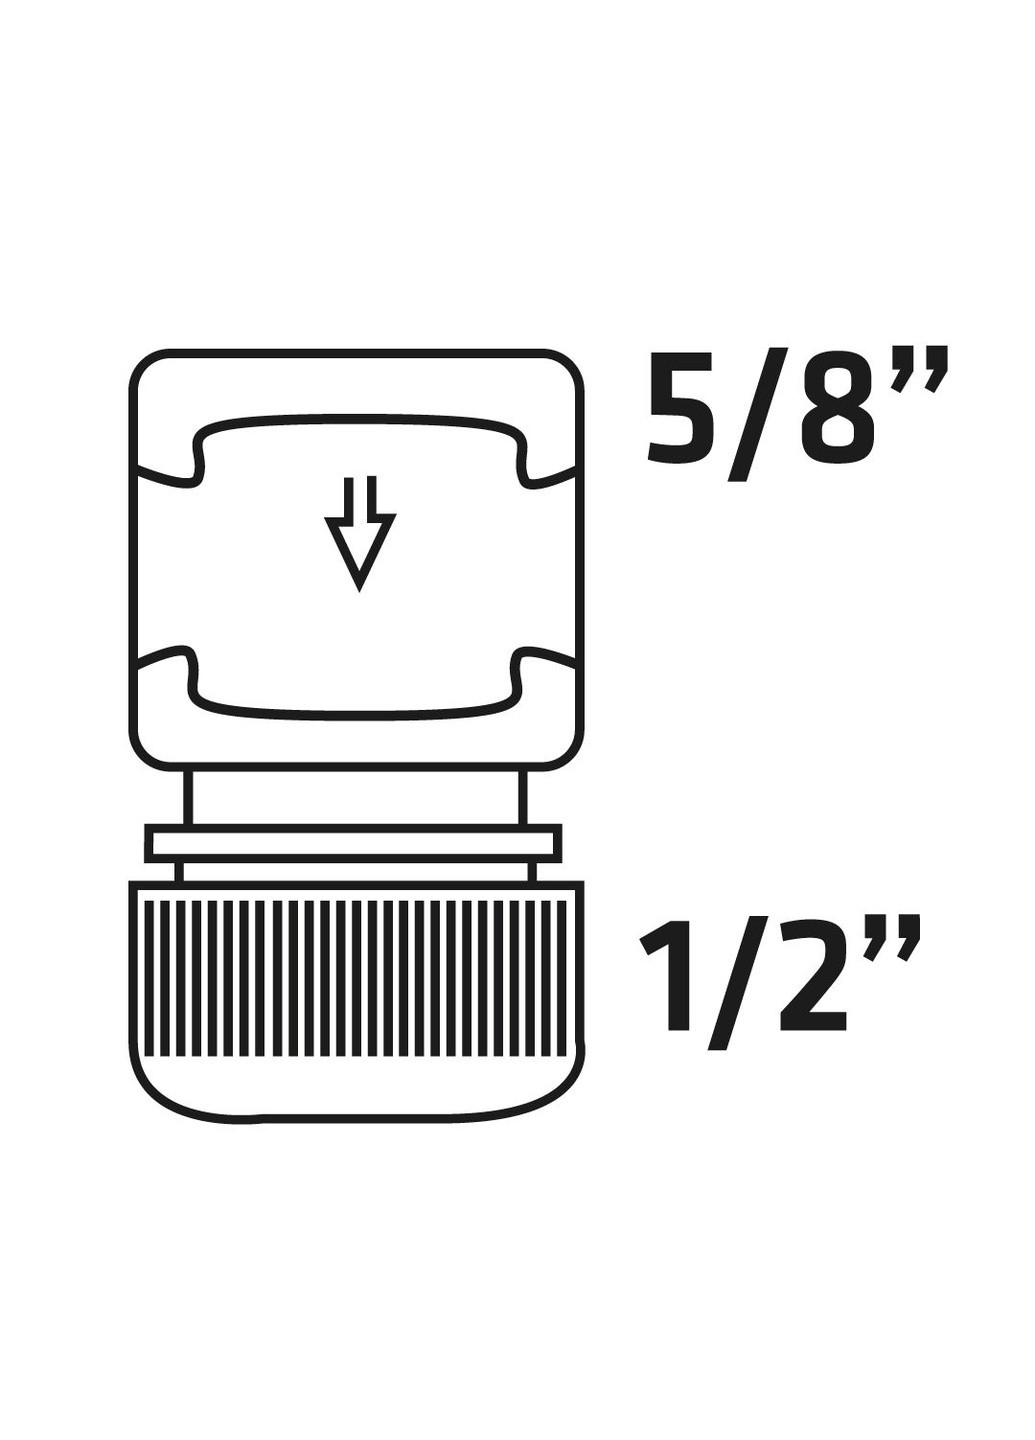 Конектор 15G730 (1/2", 58 мм) муфта наскрізна двокомпонентна (22353) Verto (263434536)